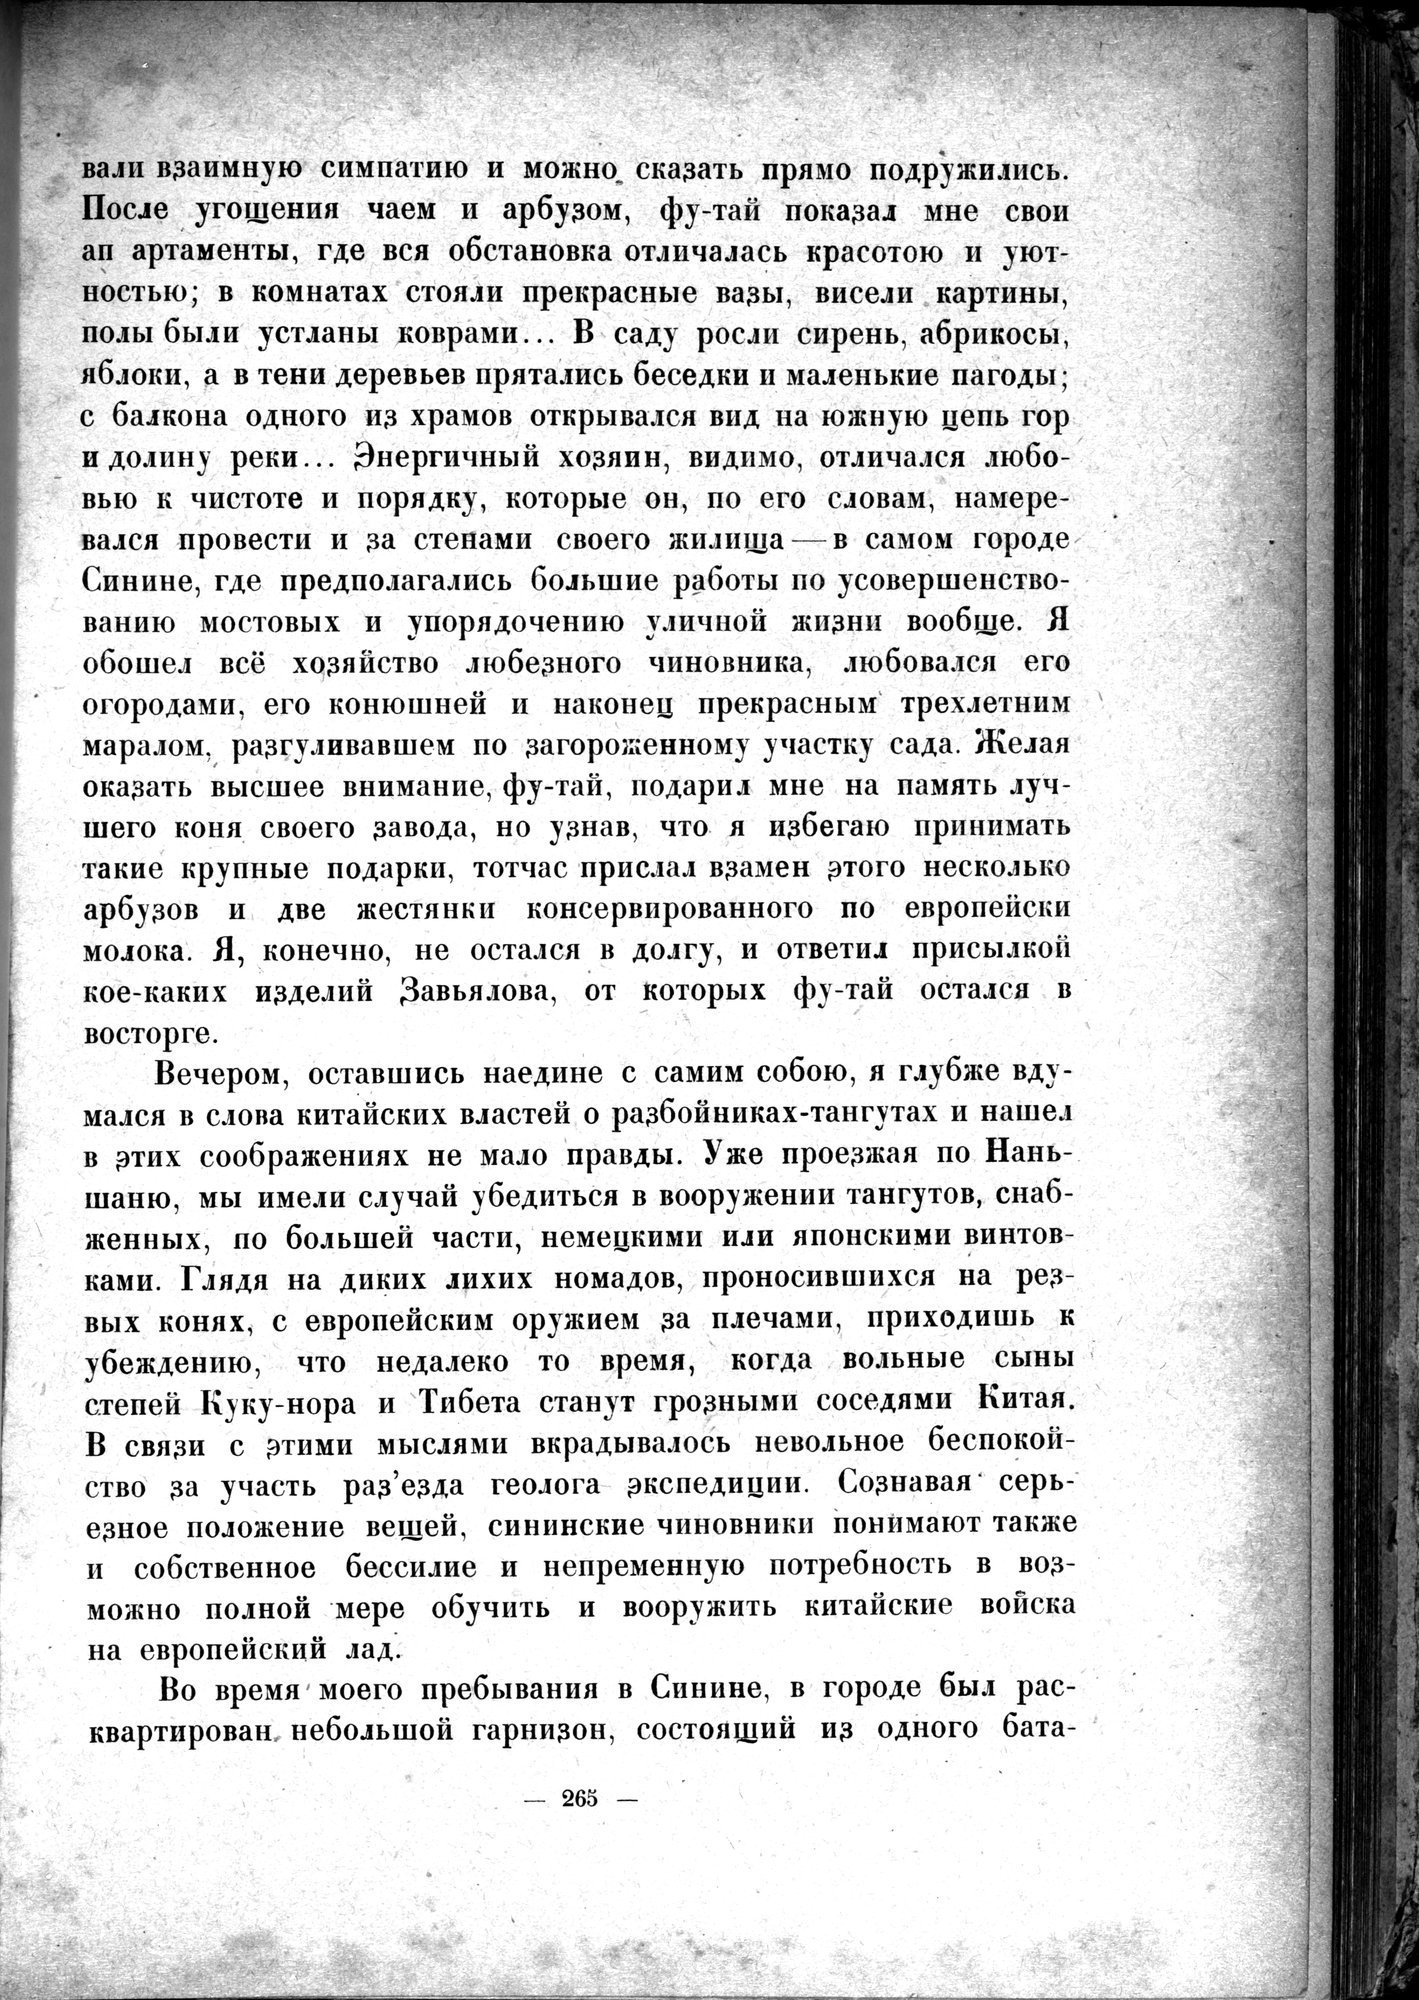 Mongoliya i Amdo i mertby gorod Khara-Khoto : vol.1 / Page 315 (Grayscale High Resolution Image)